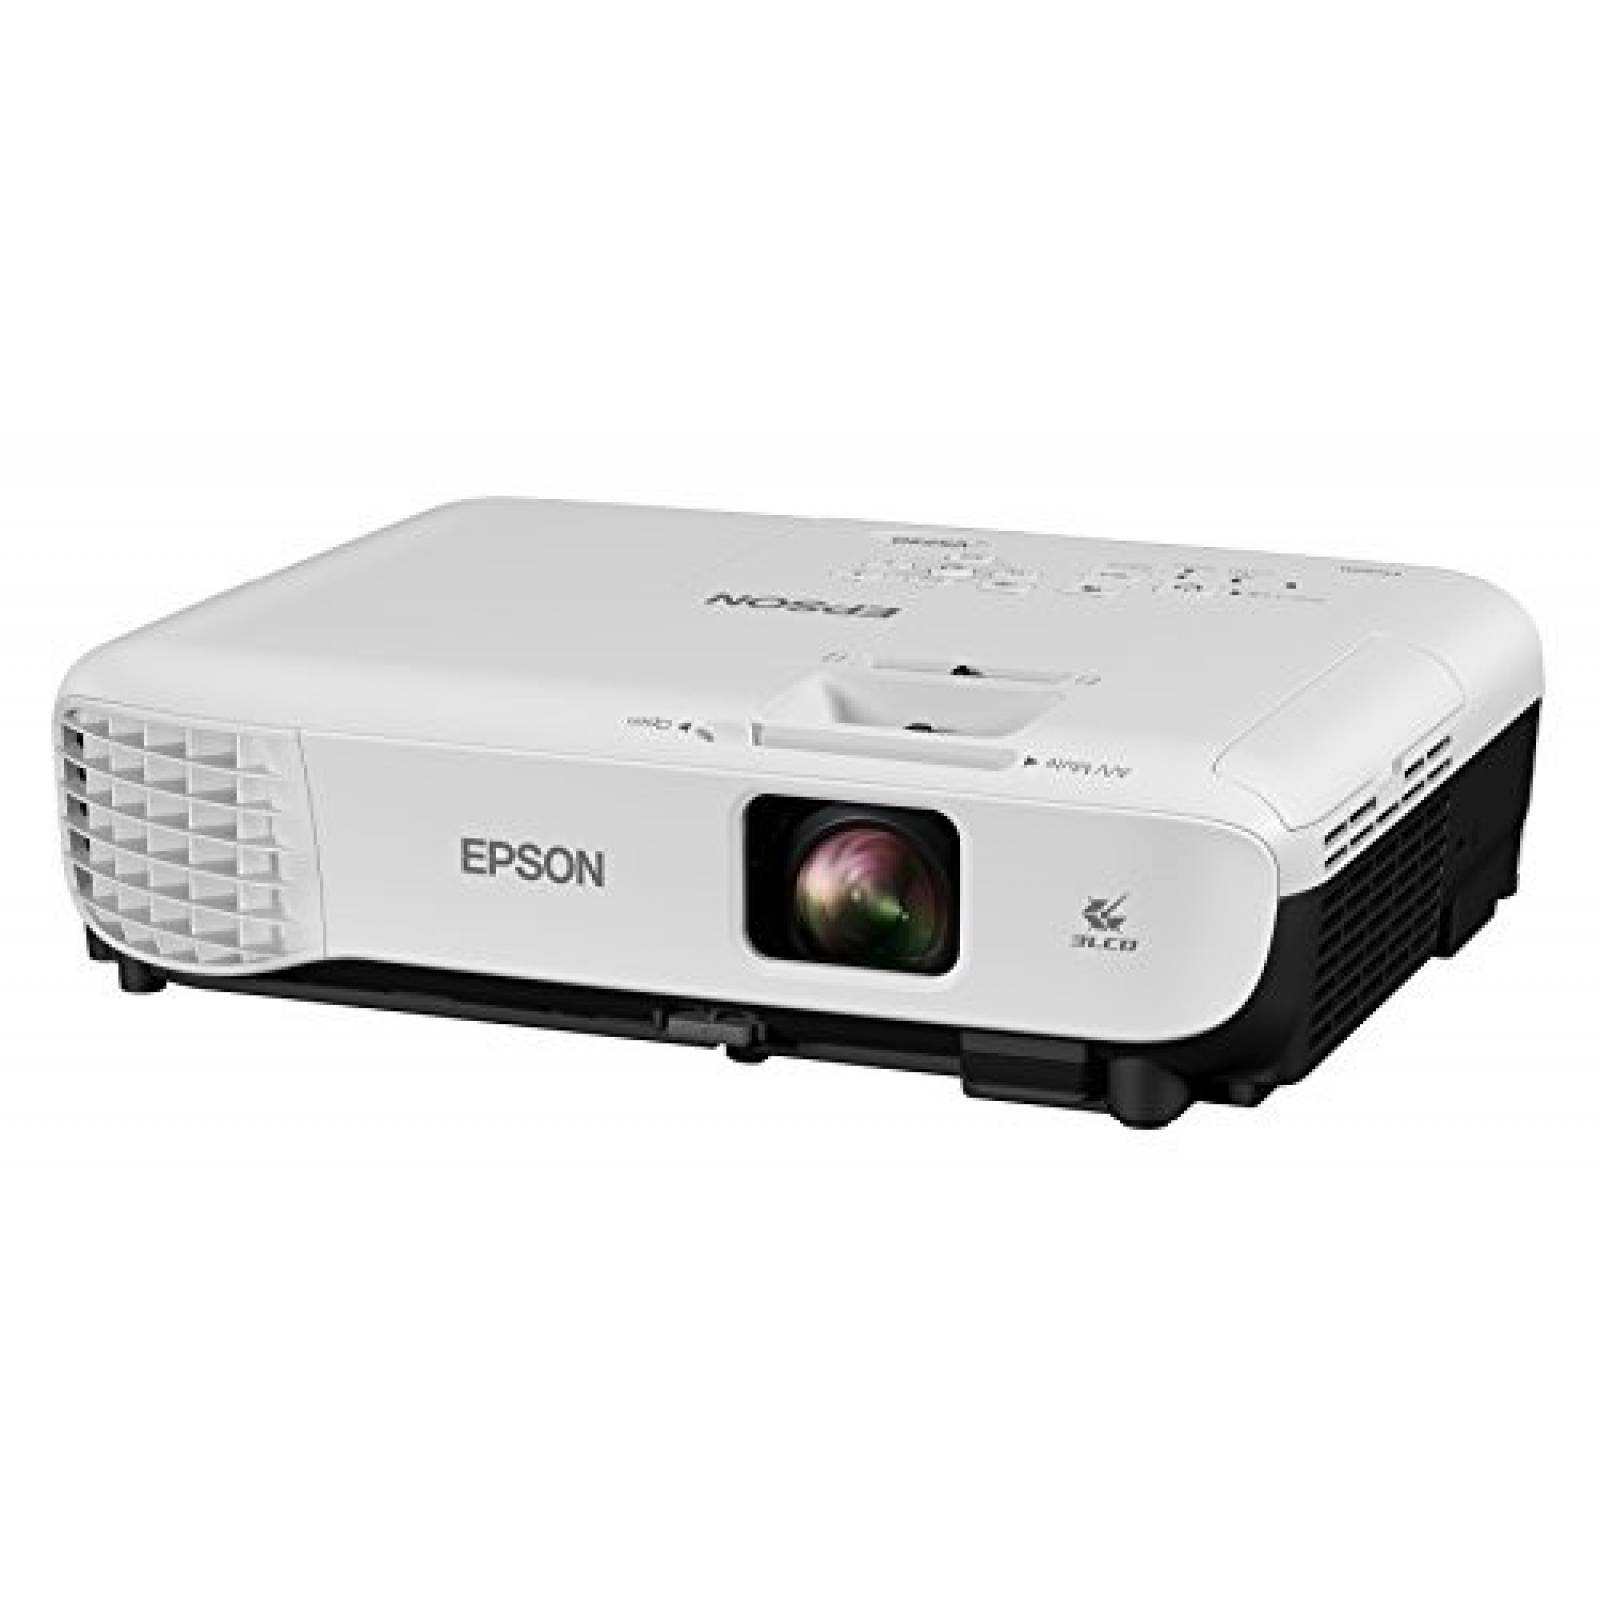 Proyector Epson VS250 3,200 lumens HDMI -Blanco